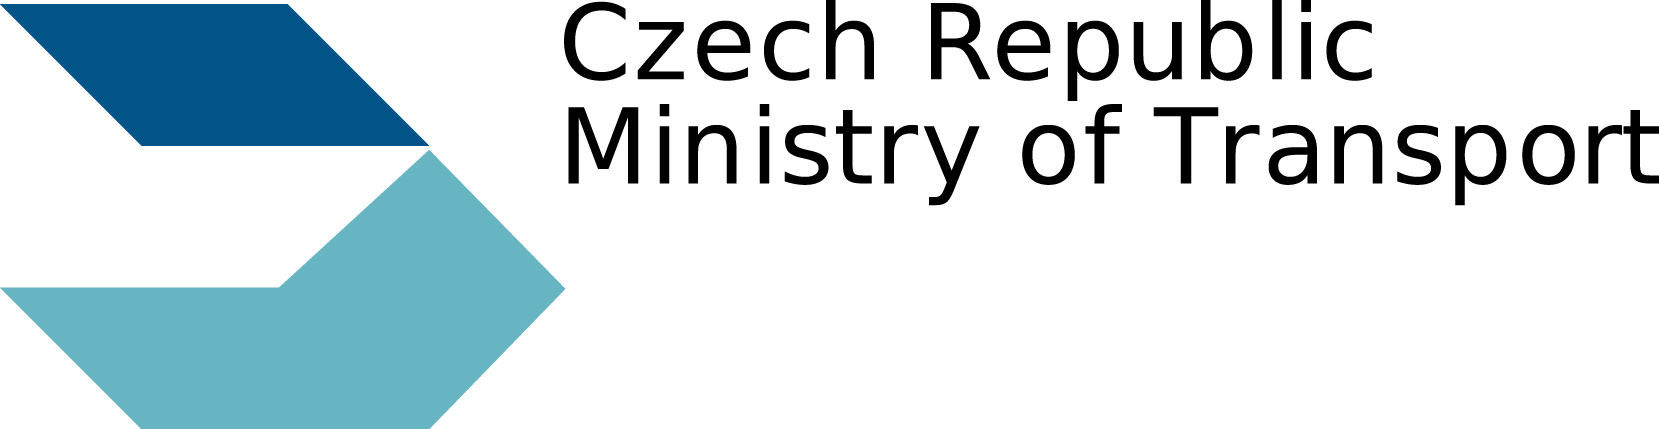 Czech Republic Ministry of Transport